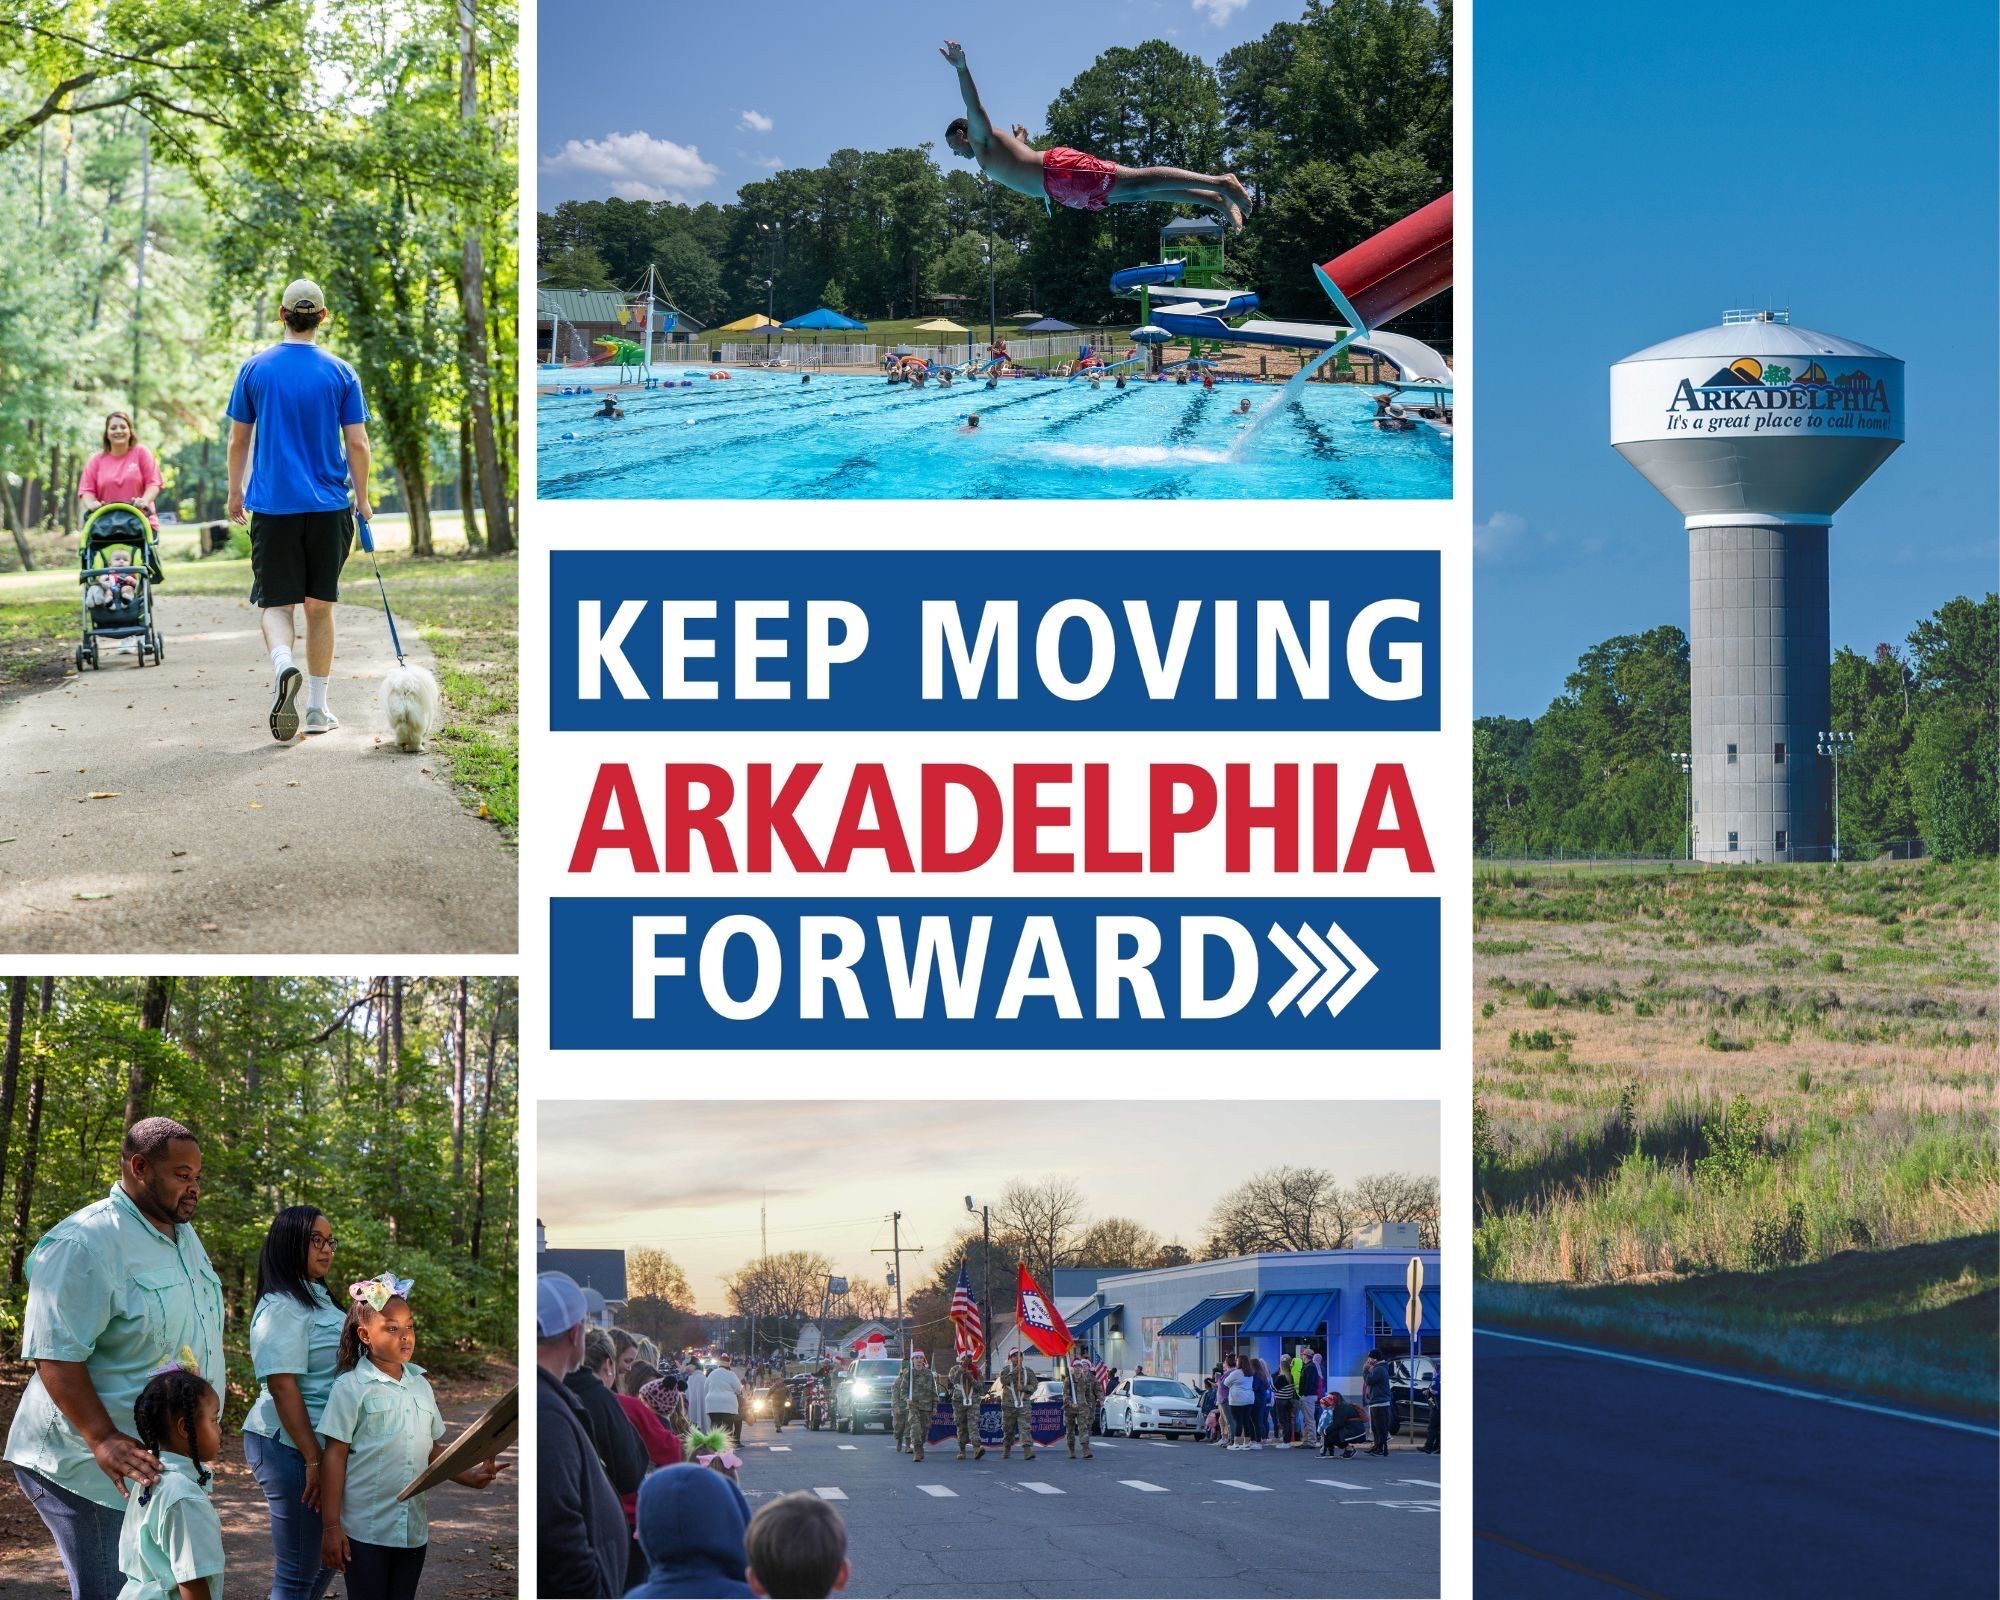 Arkadelphia Alliance and Chamber Endorses the ‘Keep Moving Arkadelphia Forward’ Initiative